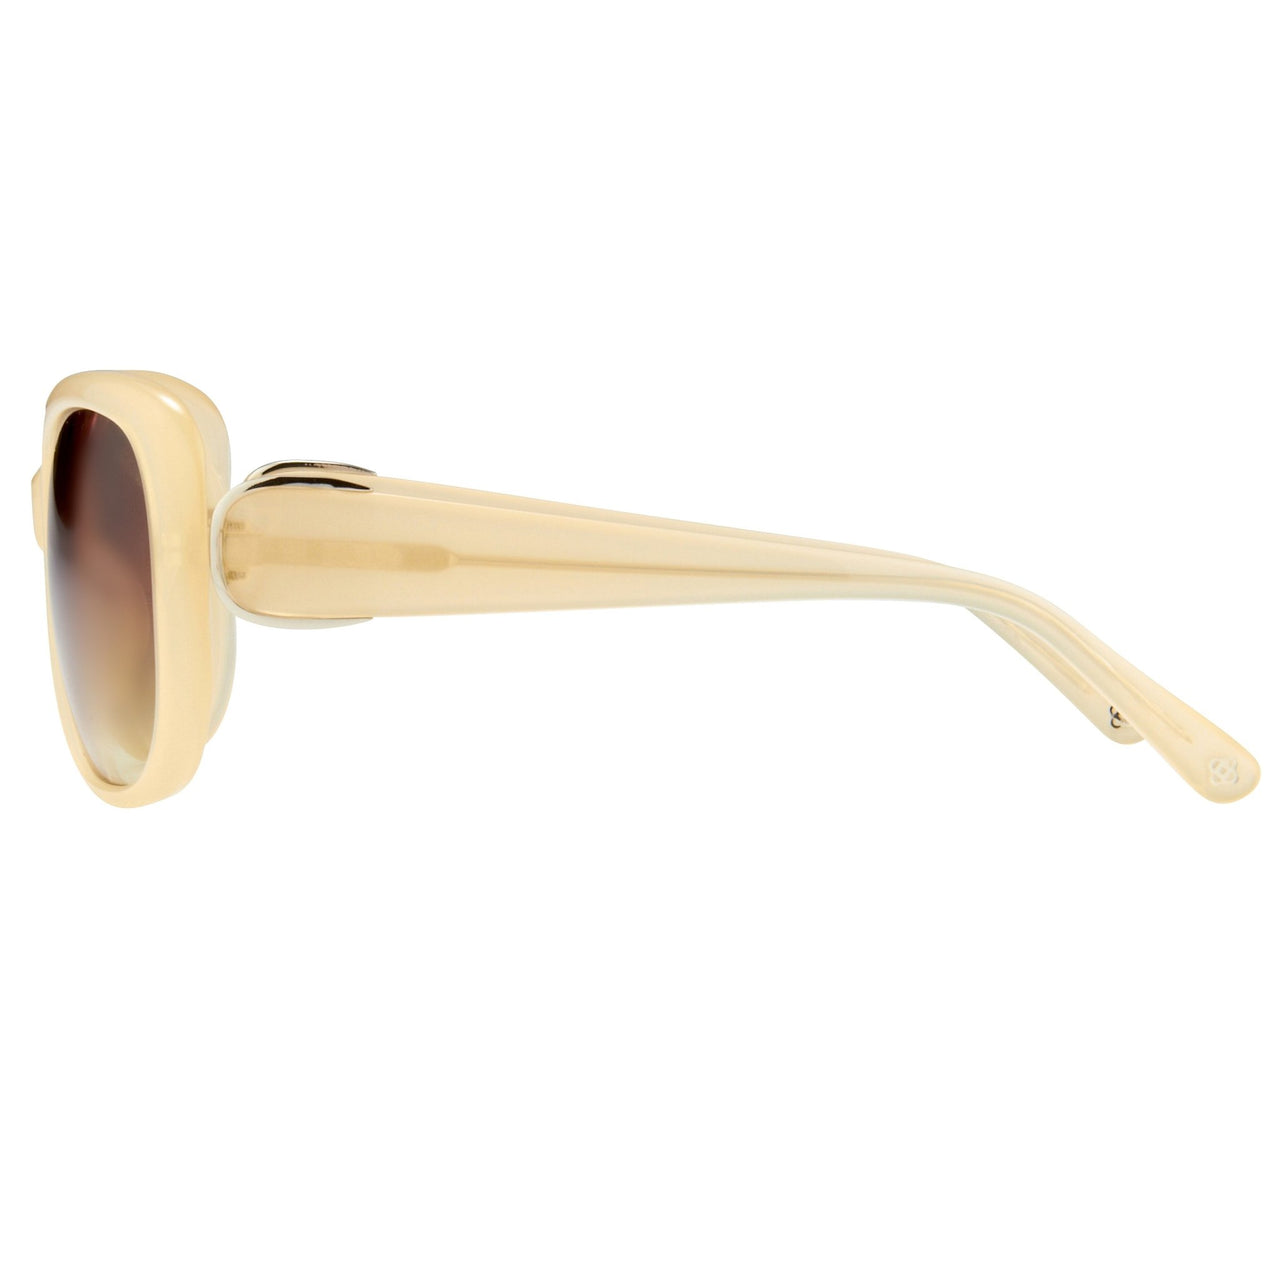 Oscar De La Renta Women Sunglasses Oversized Frame Nude with Amber Lenses - ODLR45C5SUN - Watches & Crystals